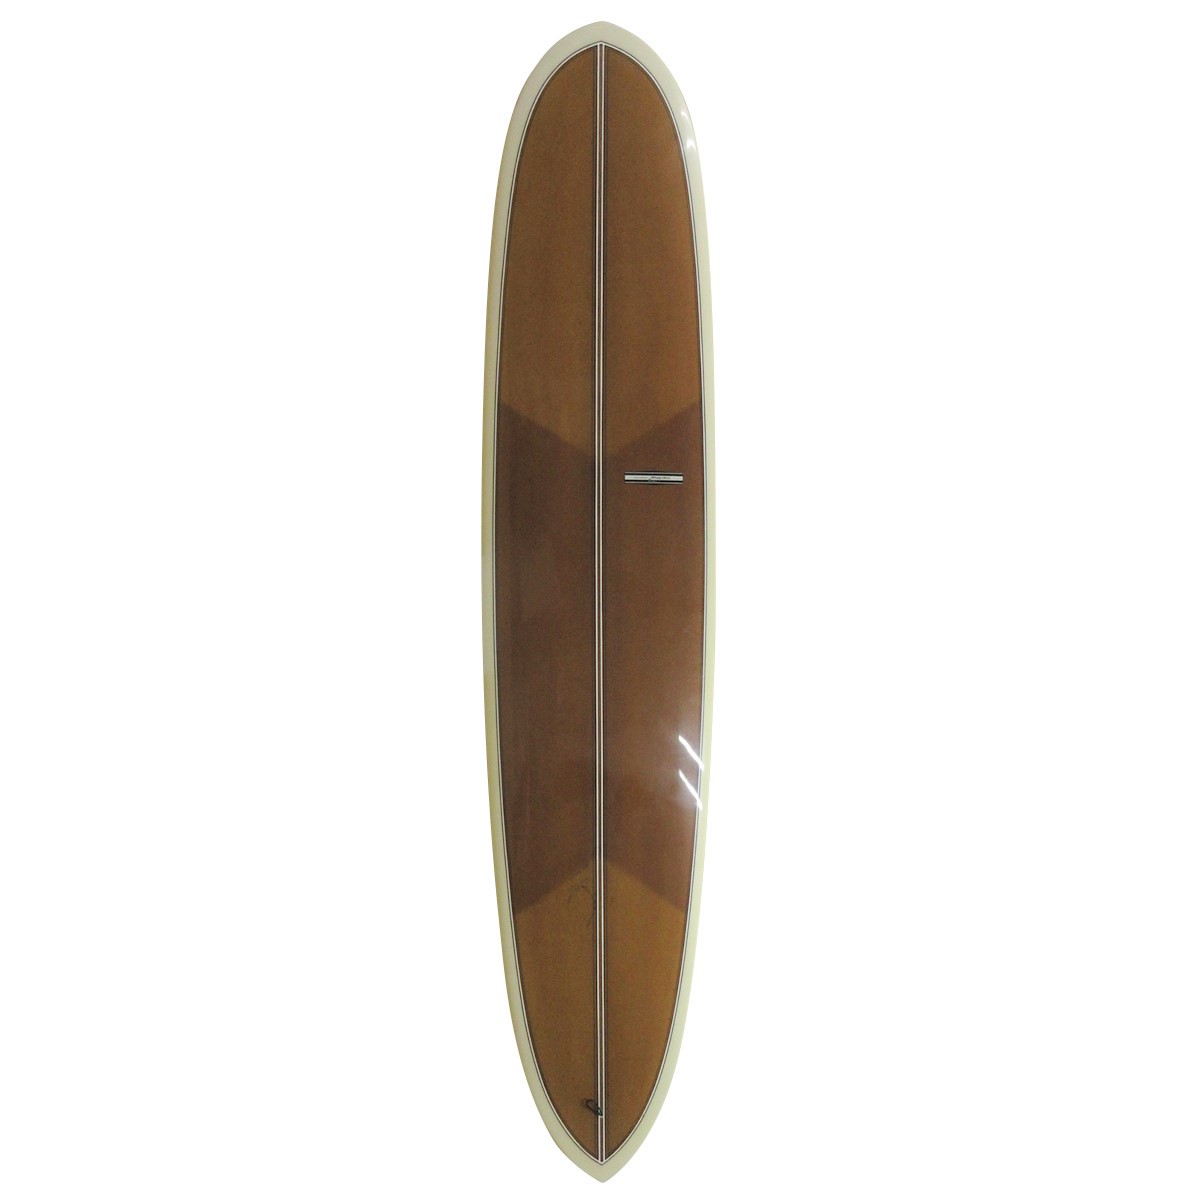 YU SURF CLASSIC / ROUND PIN 9`5 Shaped By YU